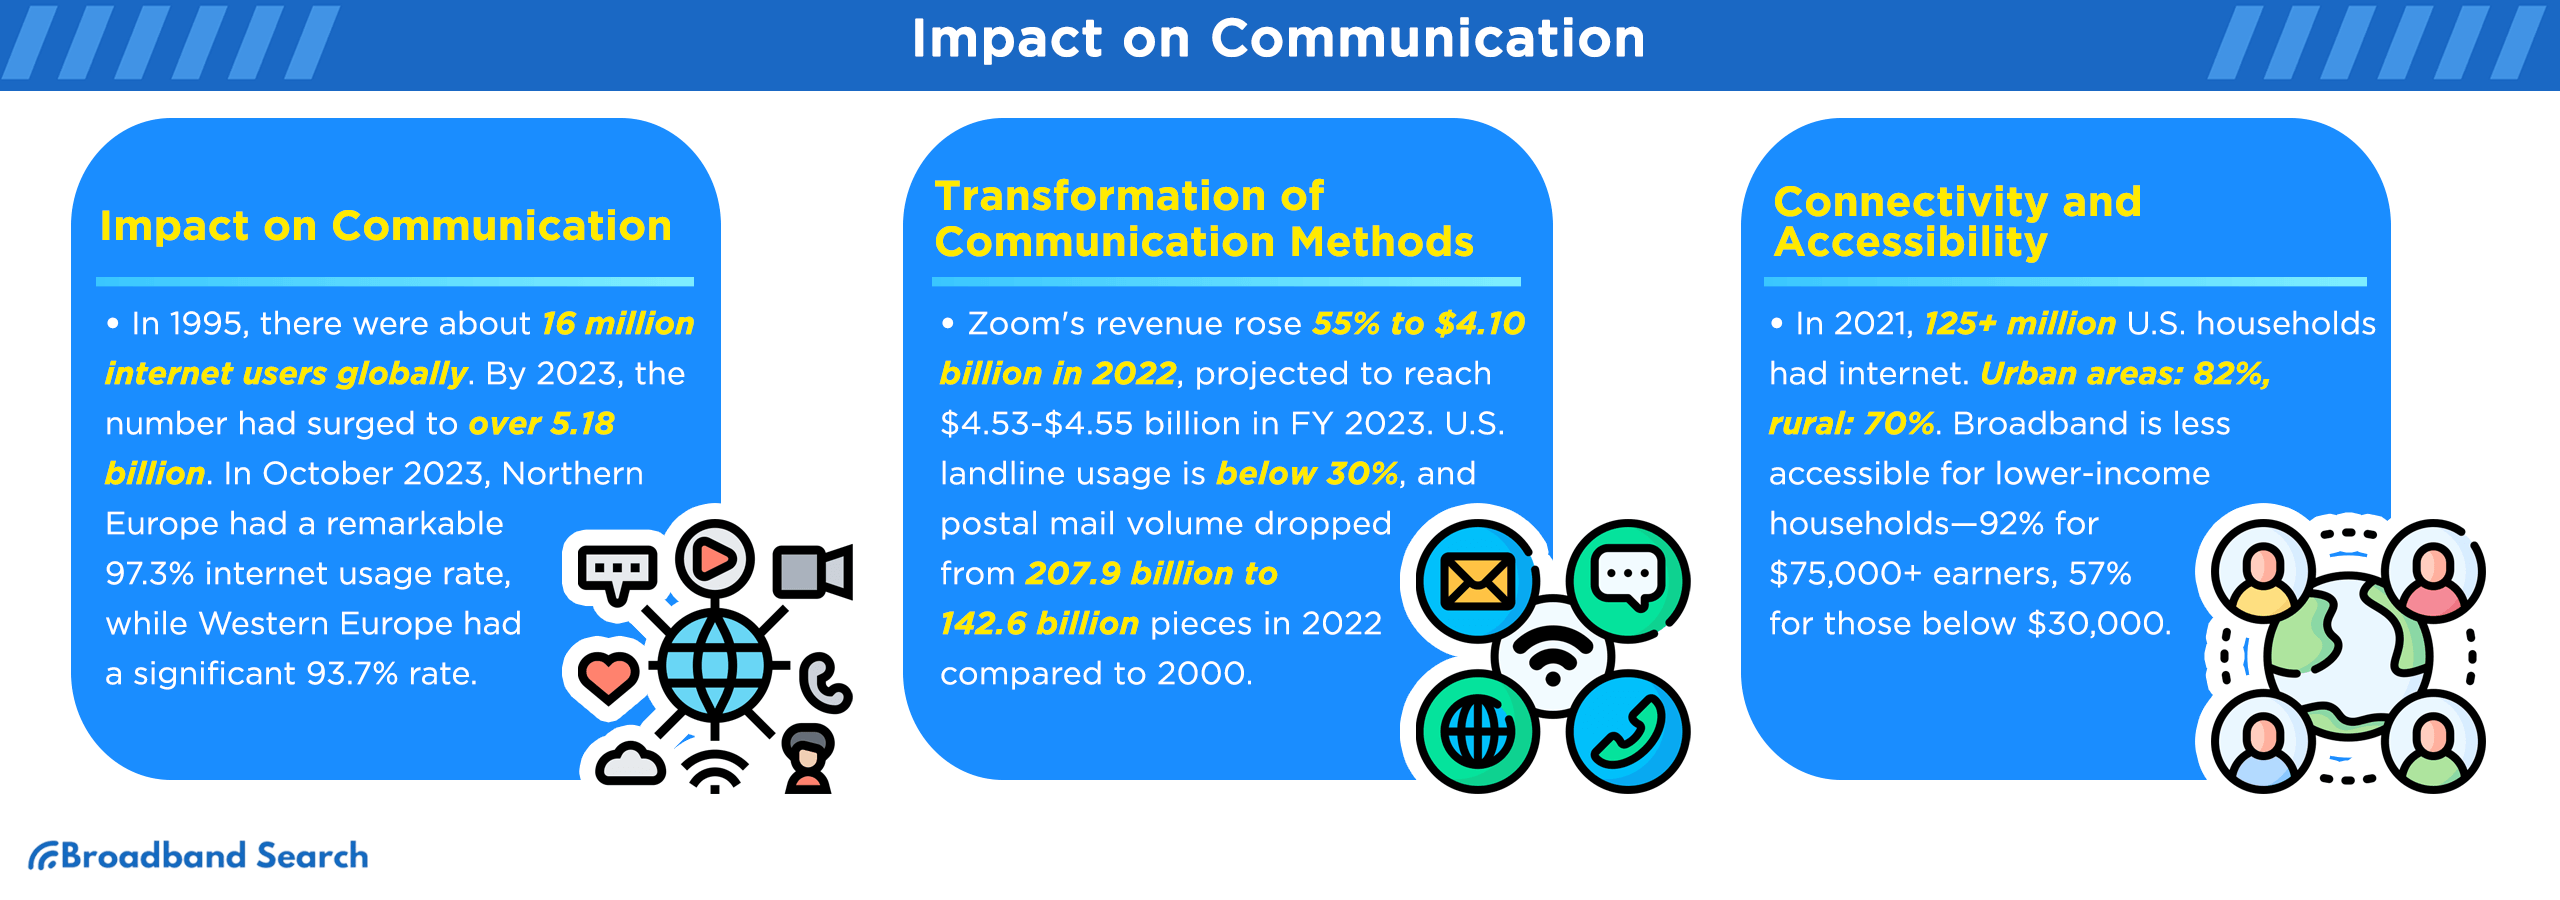 Impact on Communication